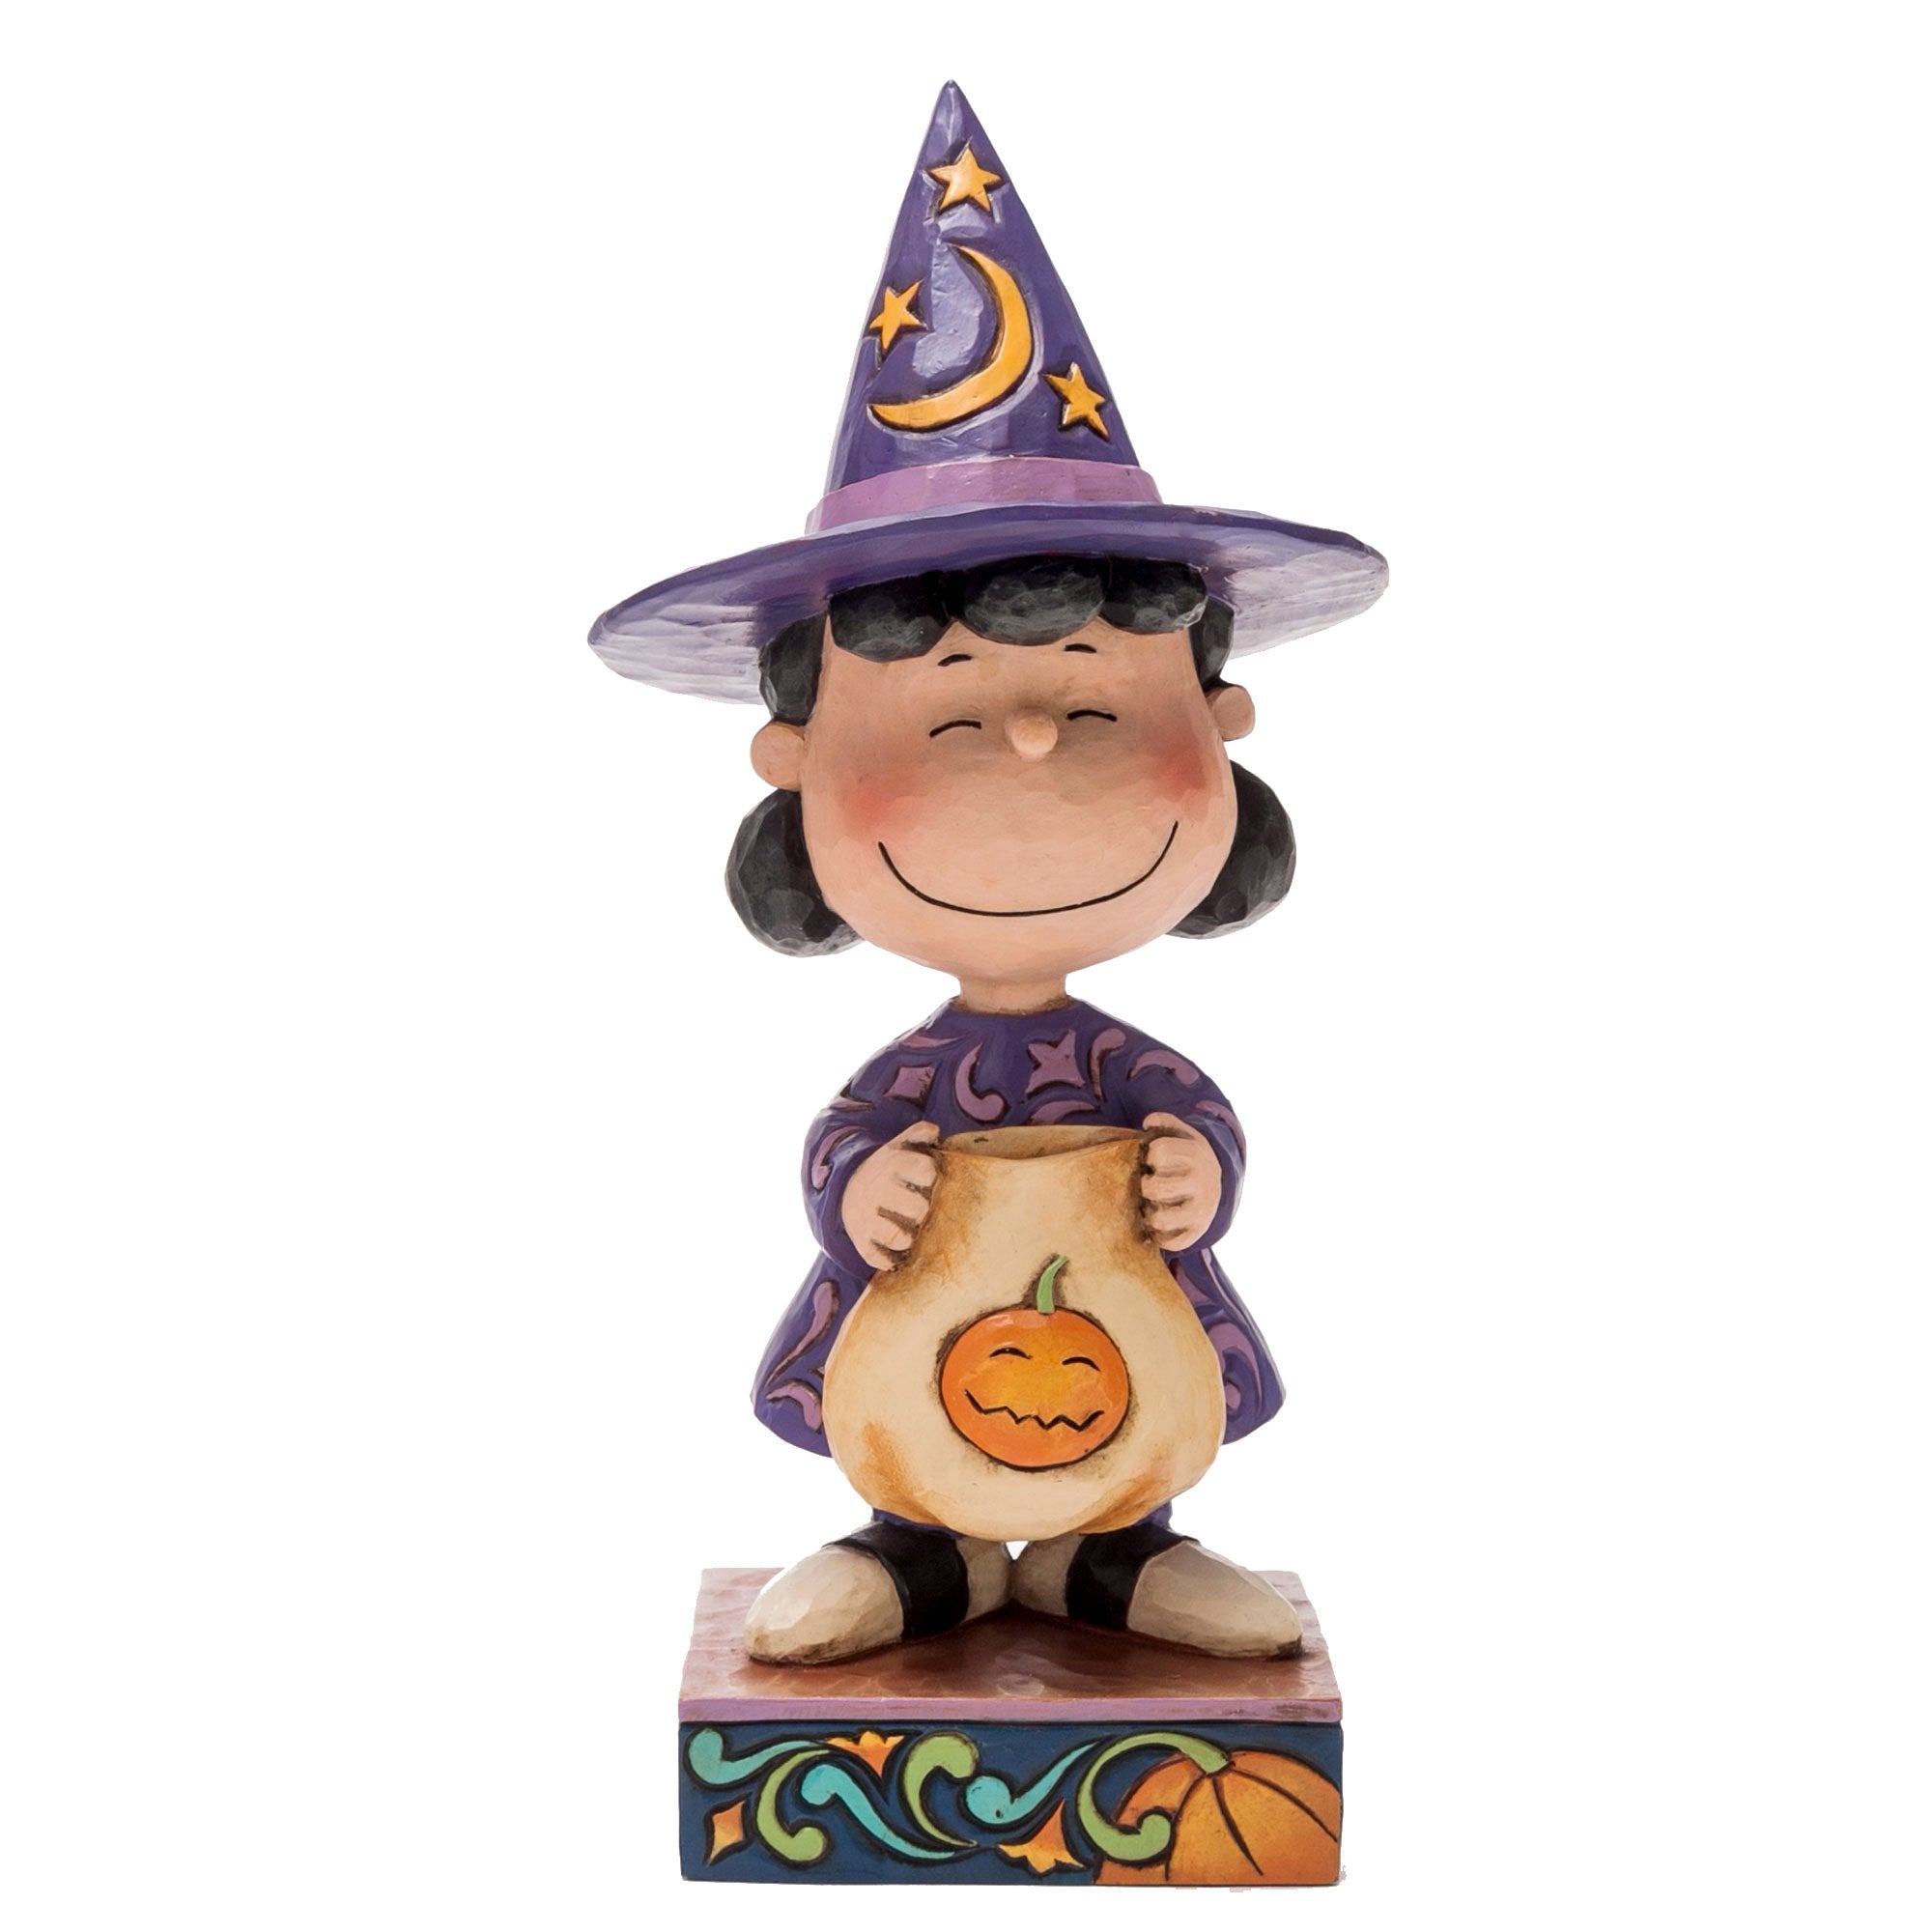 Enesco Jim Shore Peanuts Lucy in Witch Costume Figurine, 6.875"